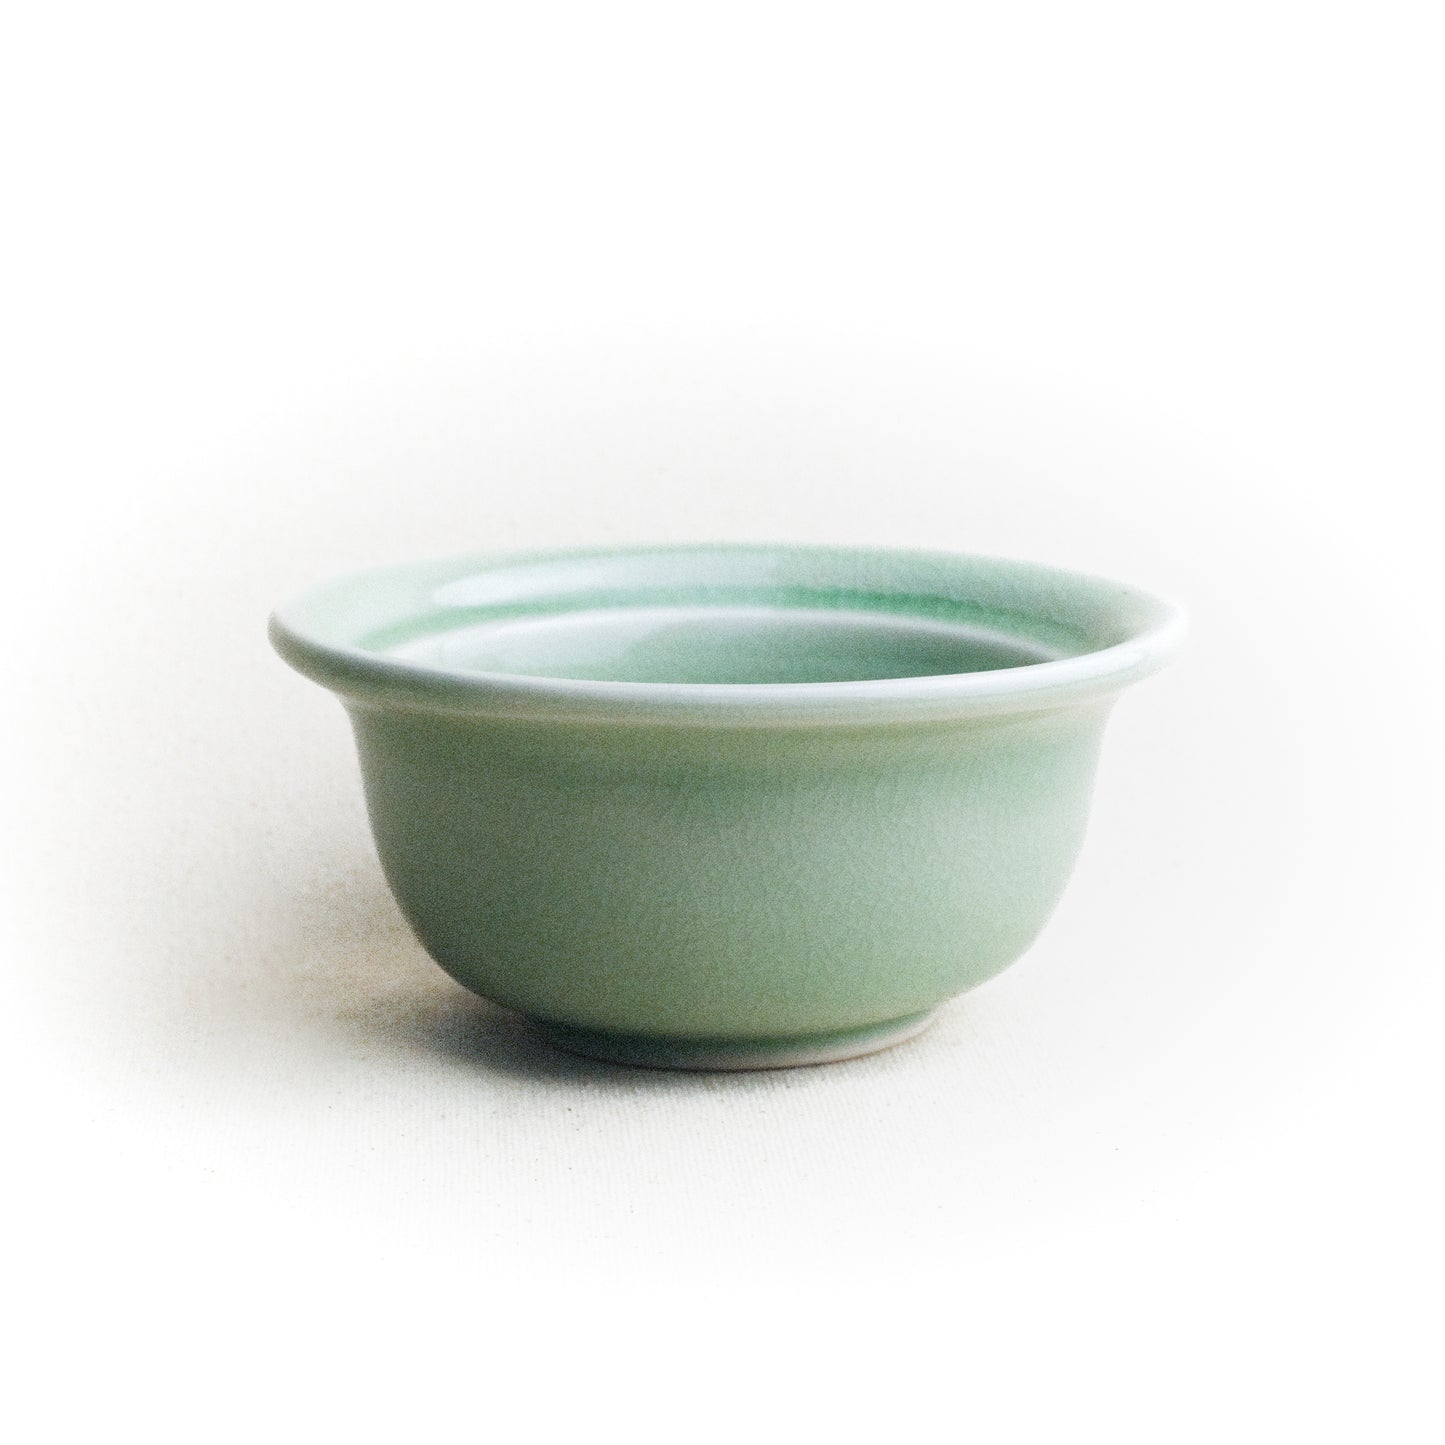 Bowl with Lotus-tip Lid